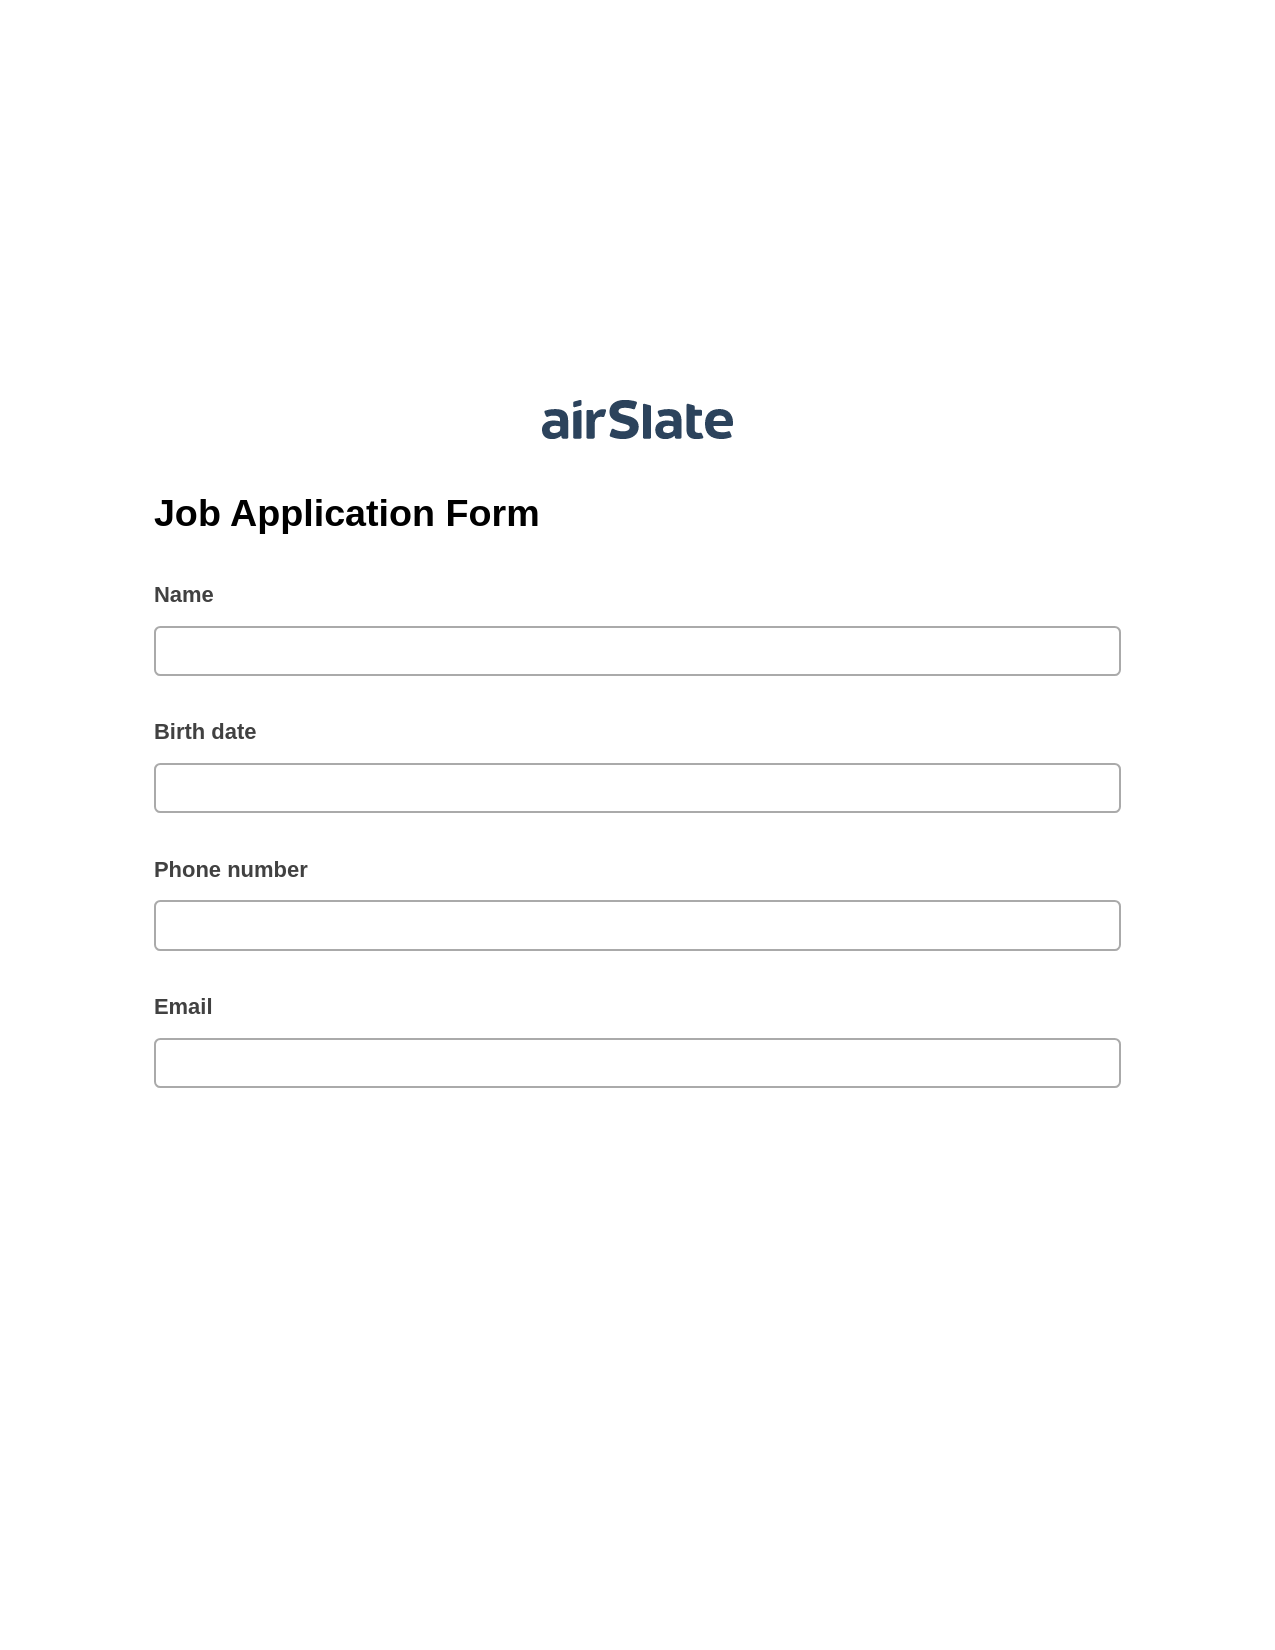 Job Application Form Pre-fill from CSV File Dropdown Options Bot, Create slate bot, Webhook Postfinish Bot